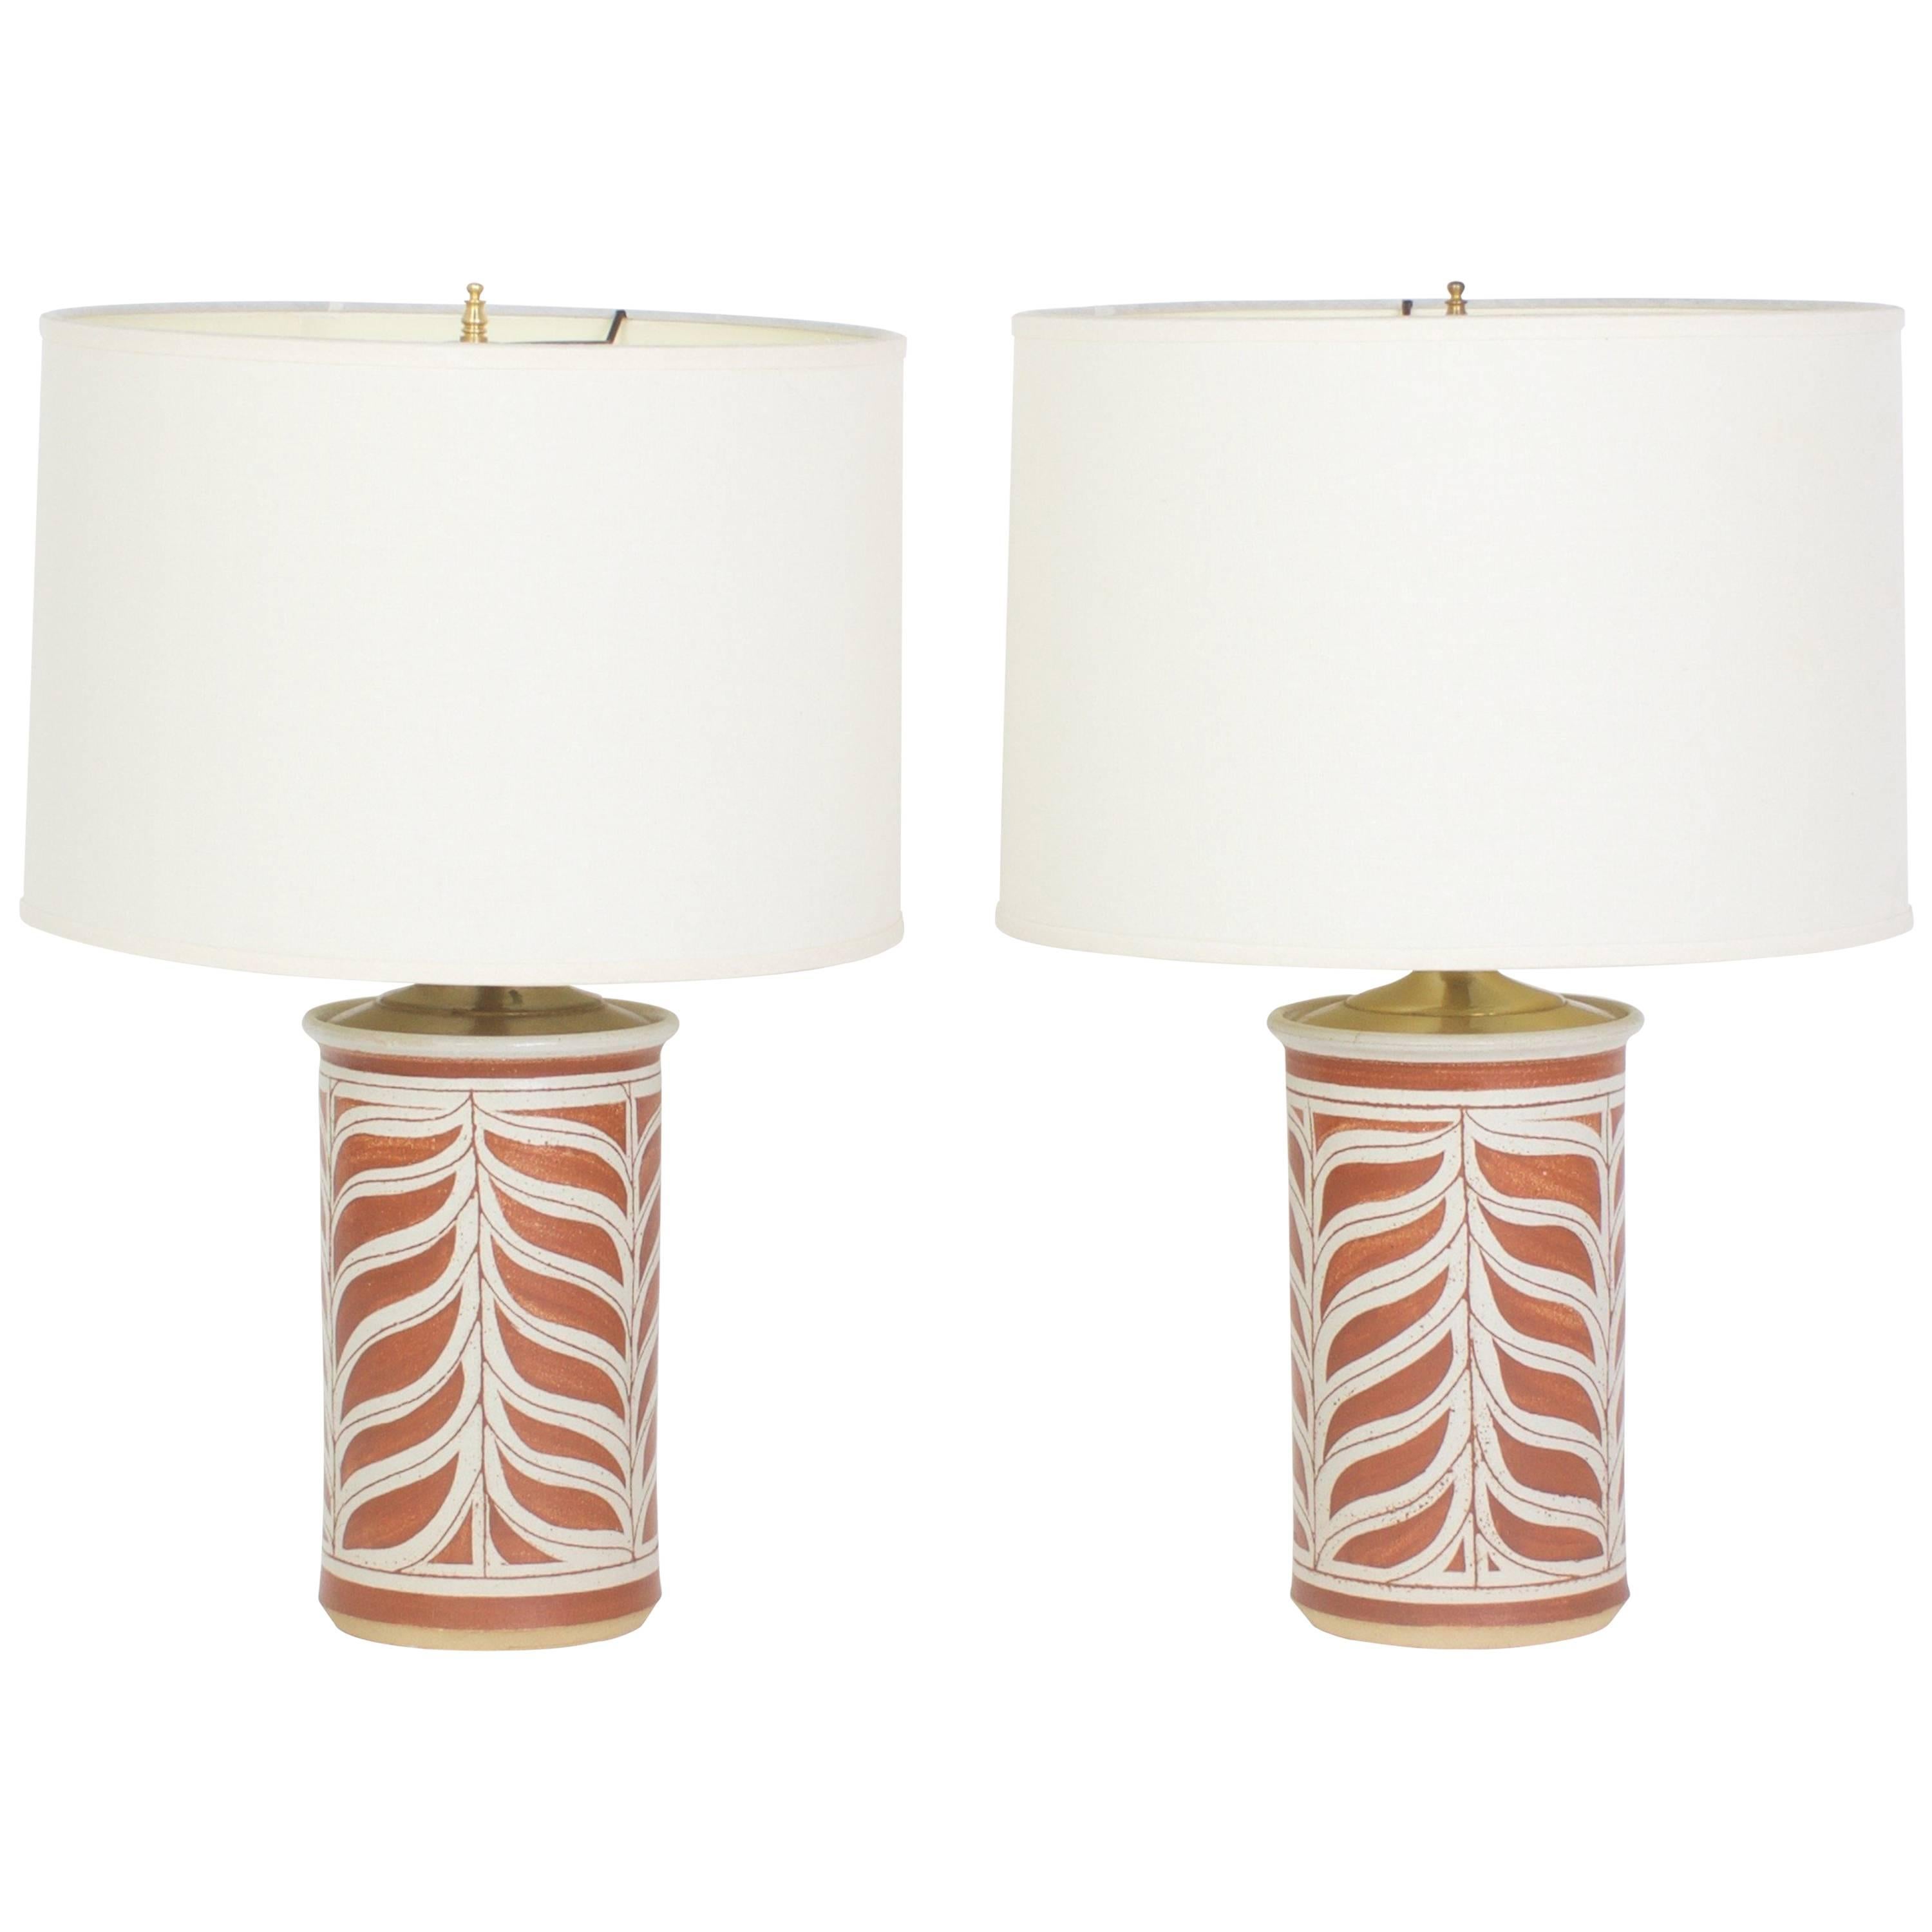 Pair of Glazed Terra Cotta Table Lamps